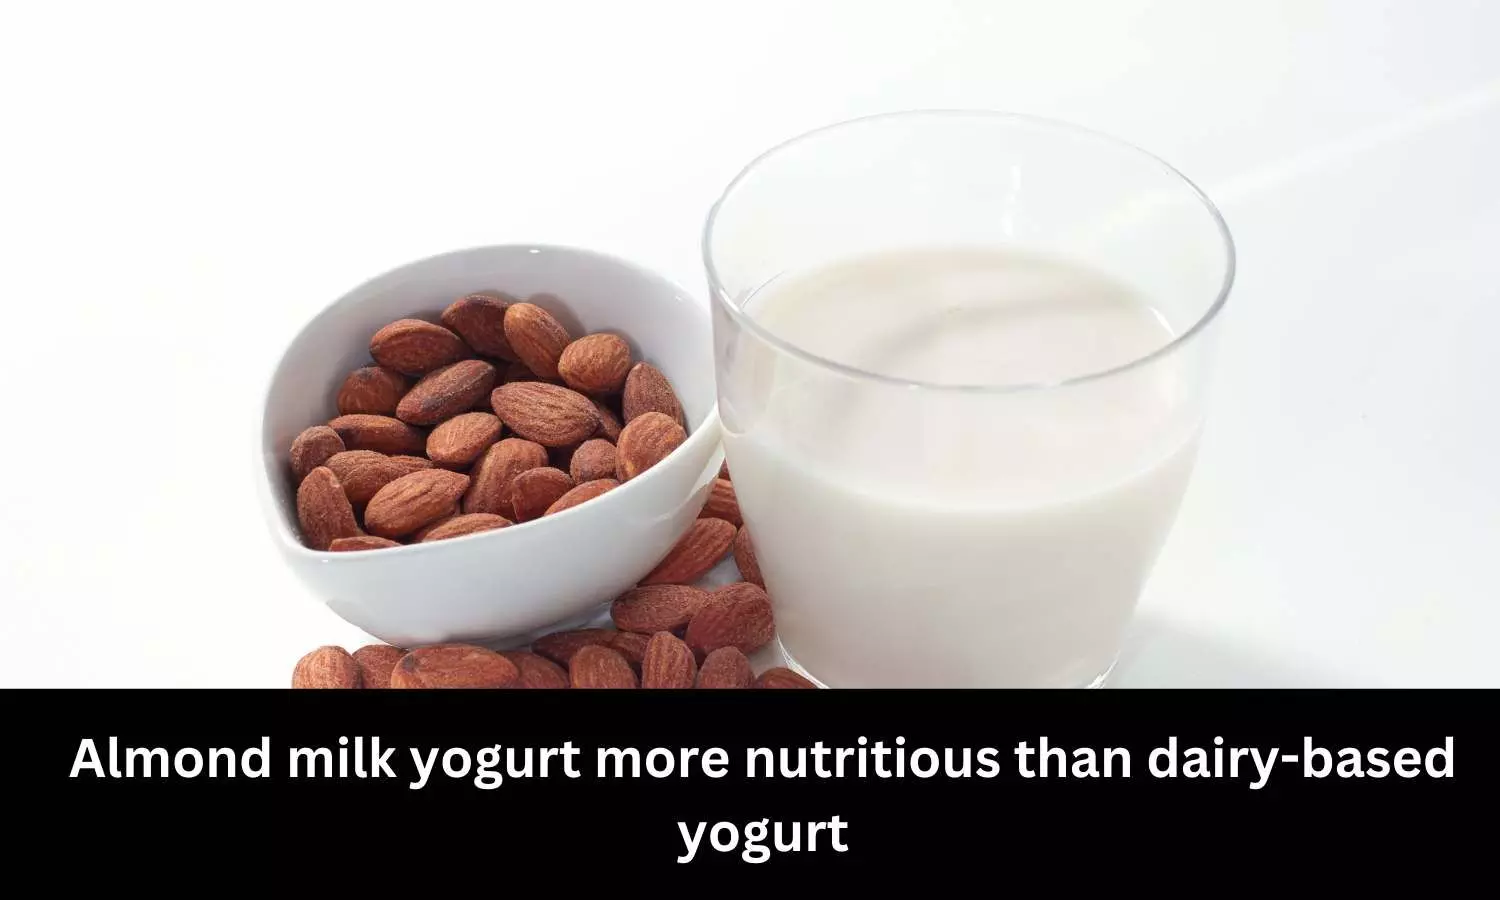 Almond milk yogurt more nutritious than dairy-based yogurt